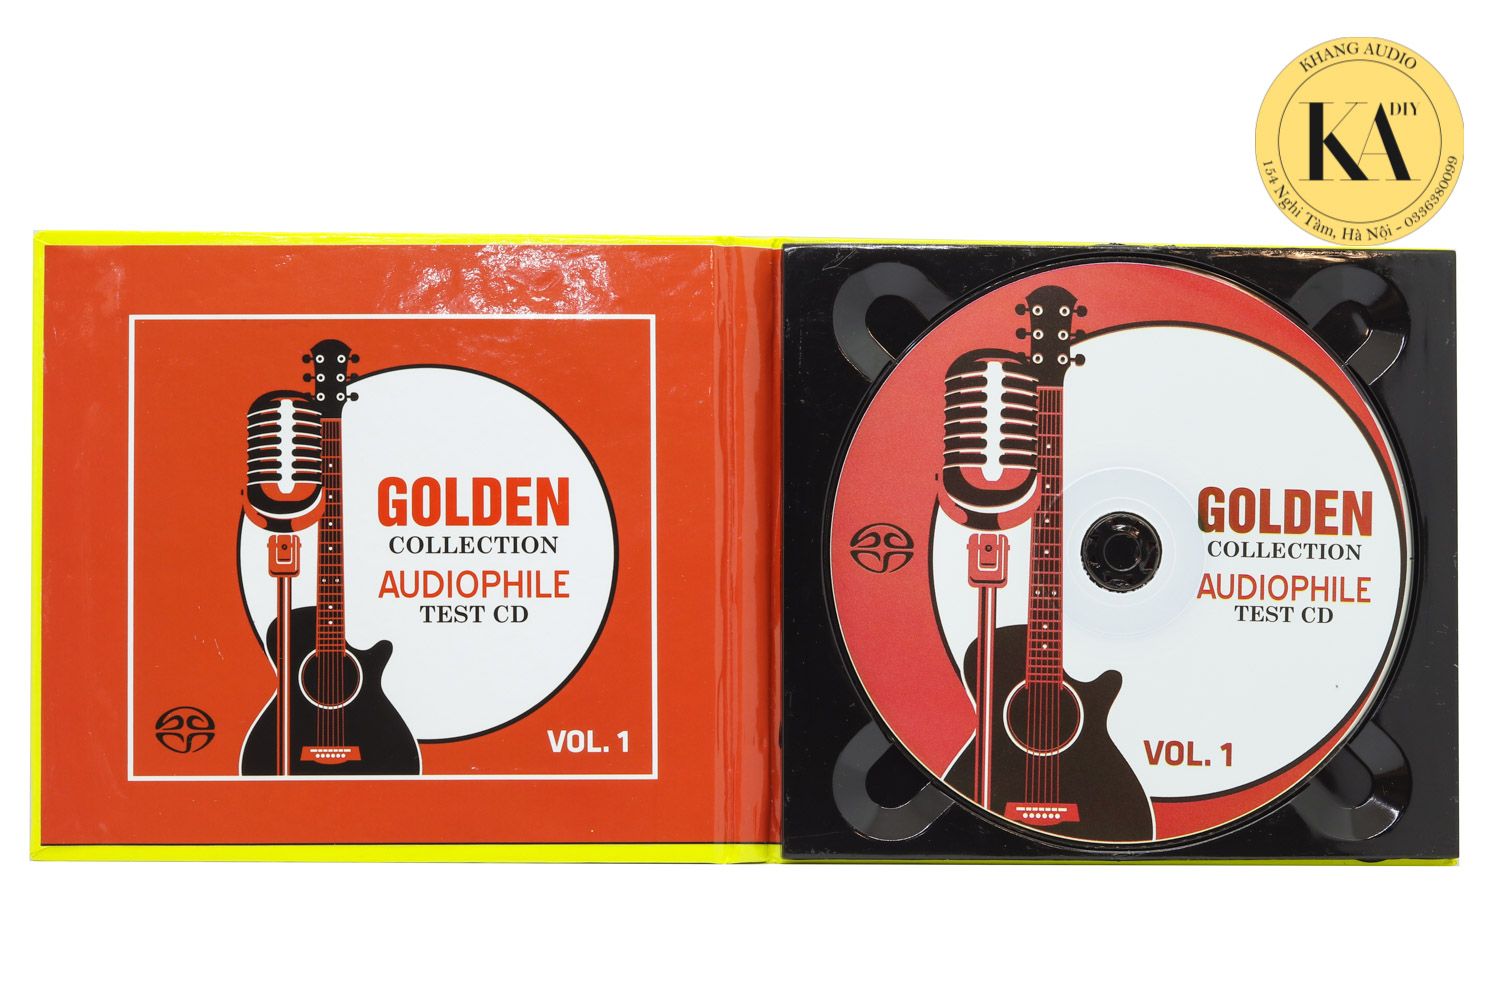 Golden Collection Audiophile Test CD Vol.1 Khang Audio 0336380099